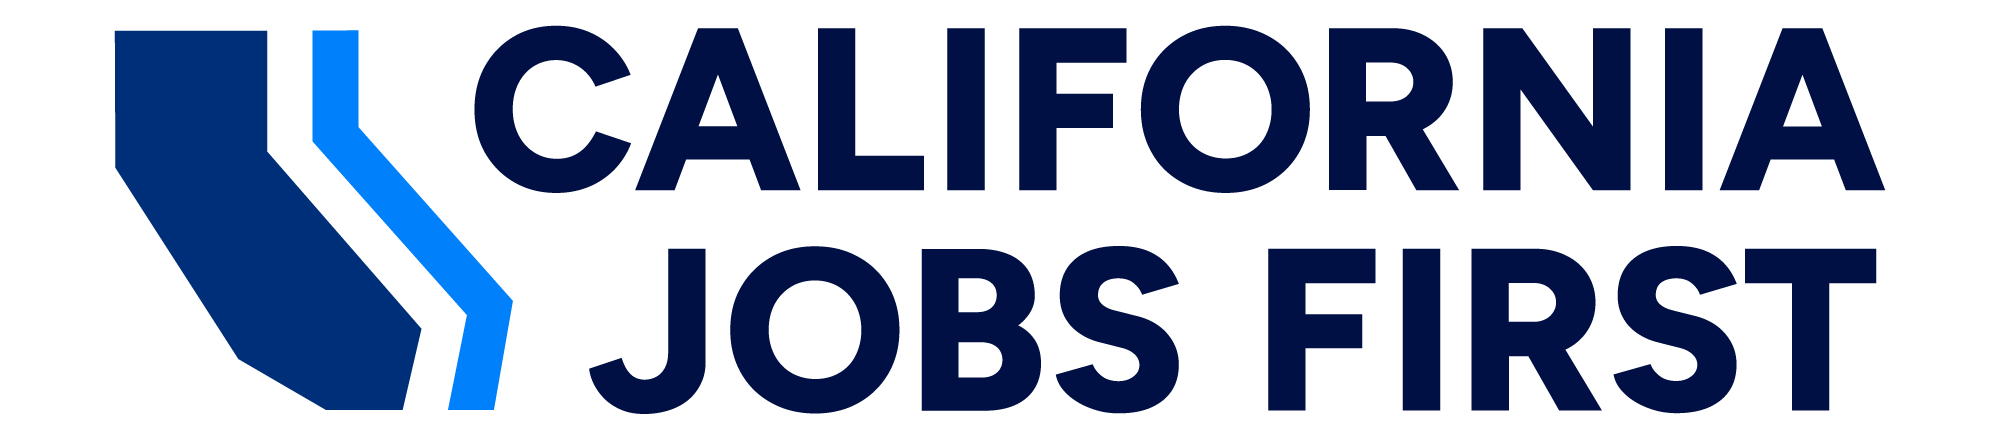 California Jobs First logo